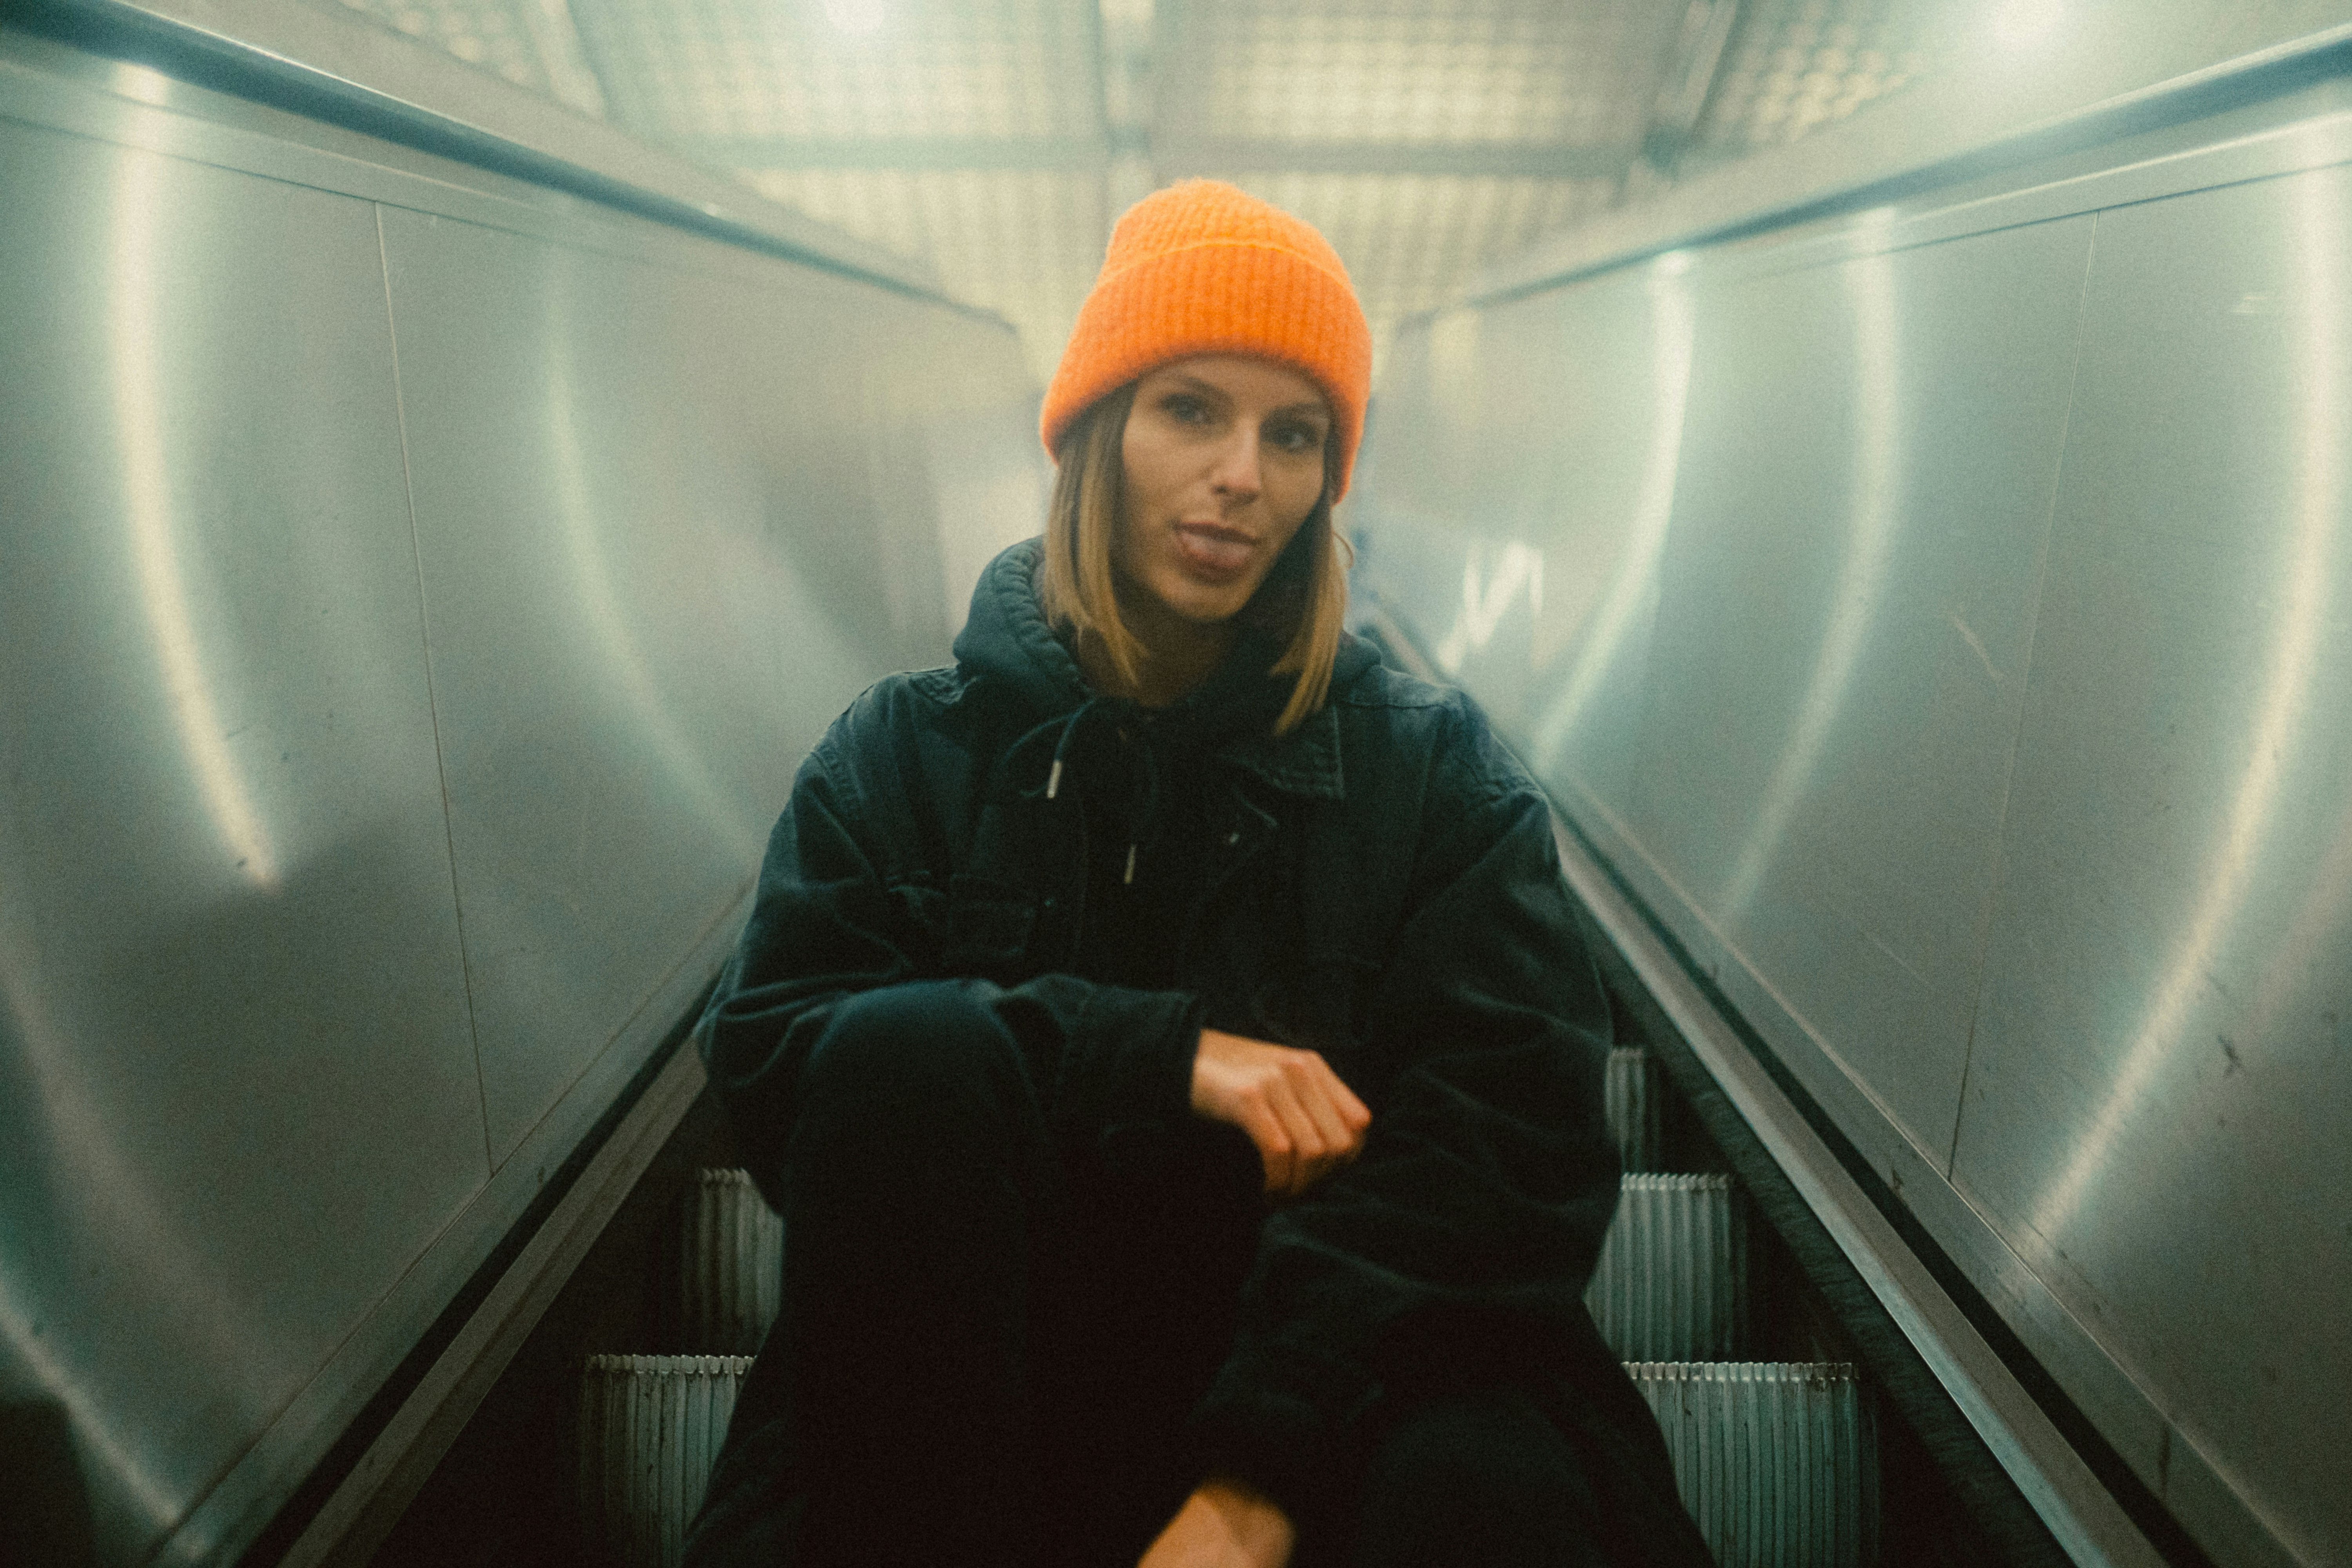 woman in black jacket and orange knit cap sitting on escalator